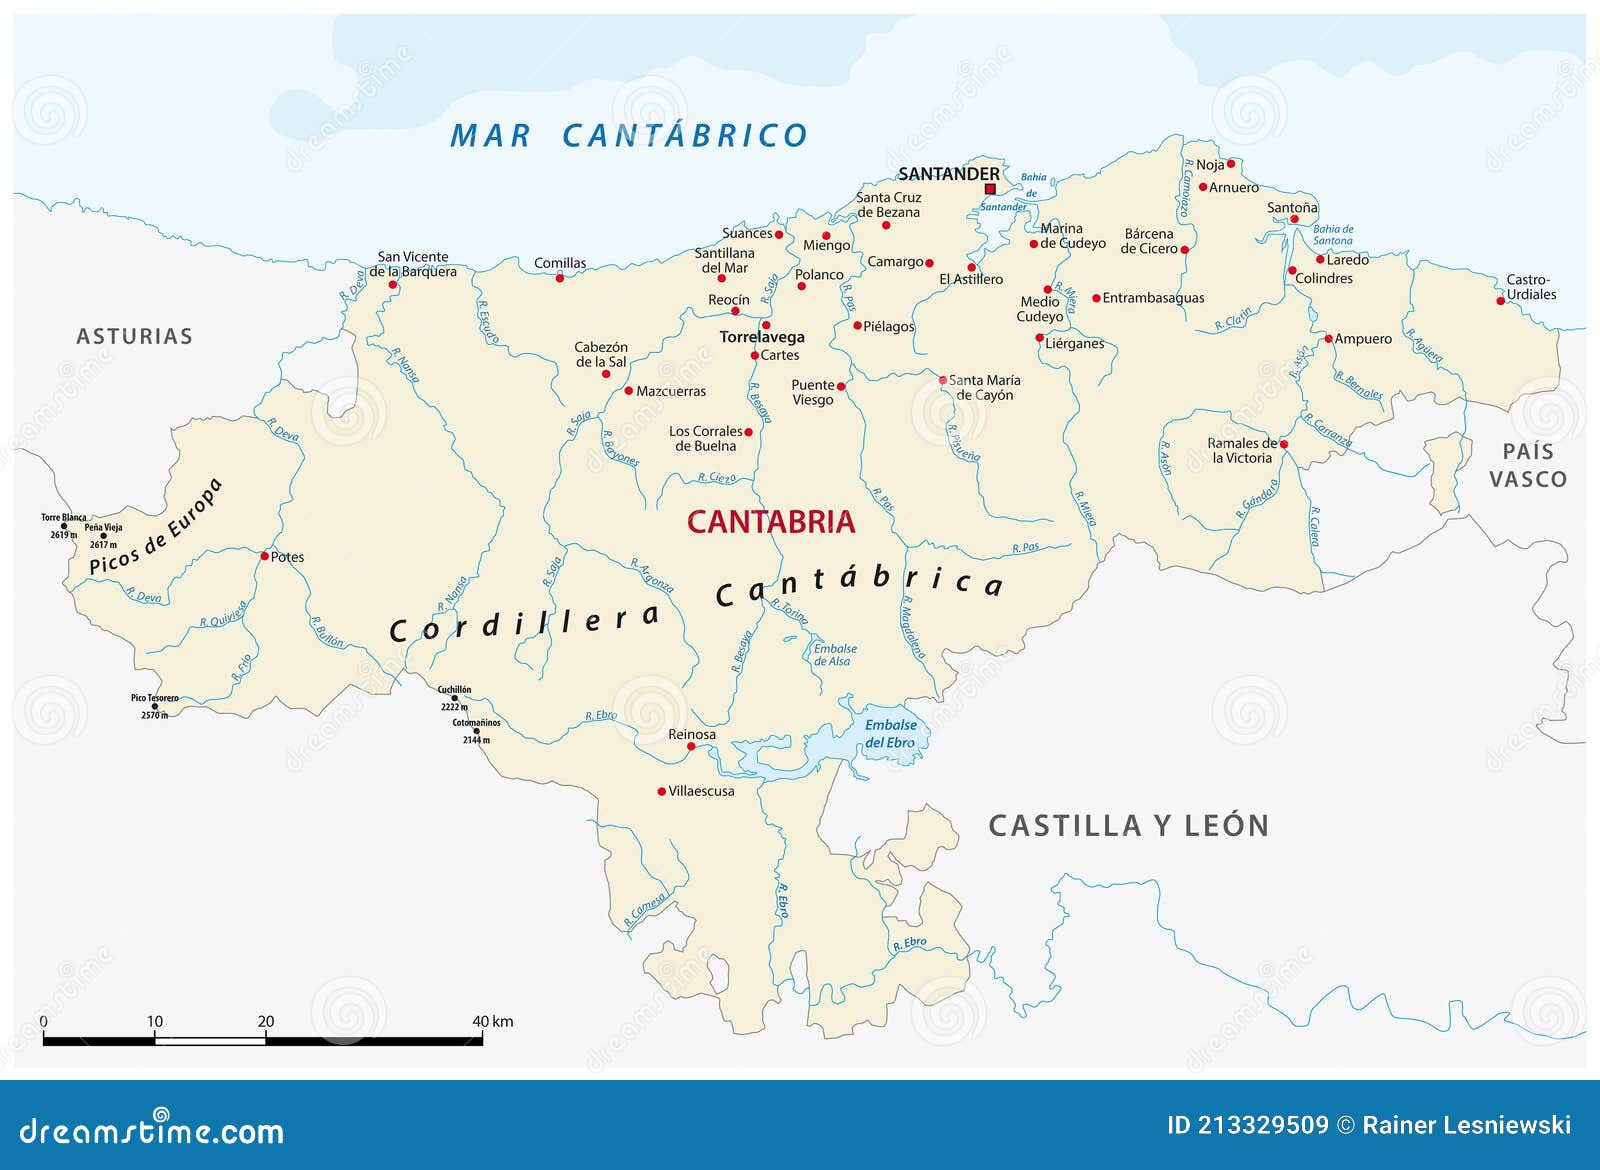  map of the spanish autonomous communities of cantabria